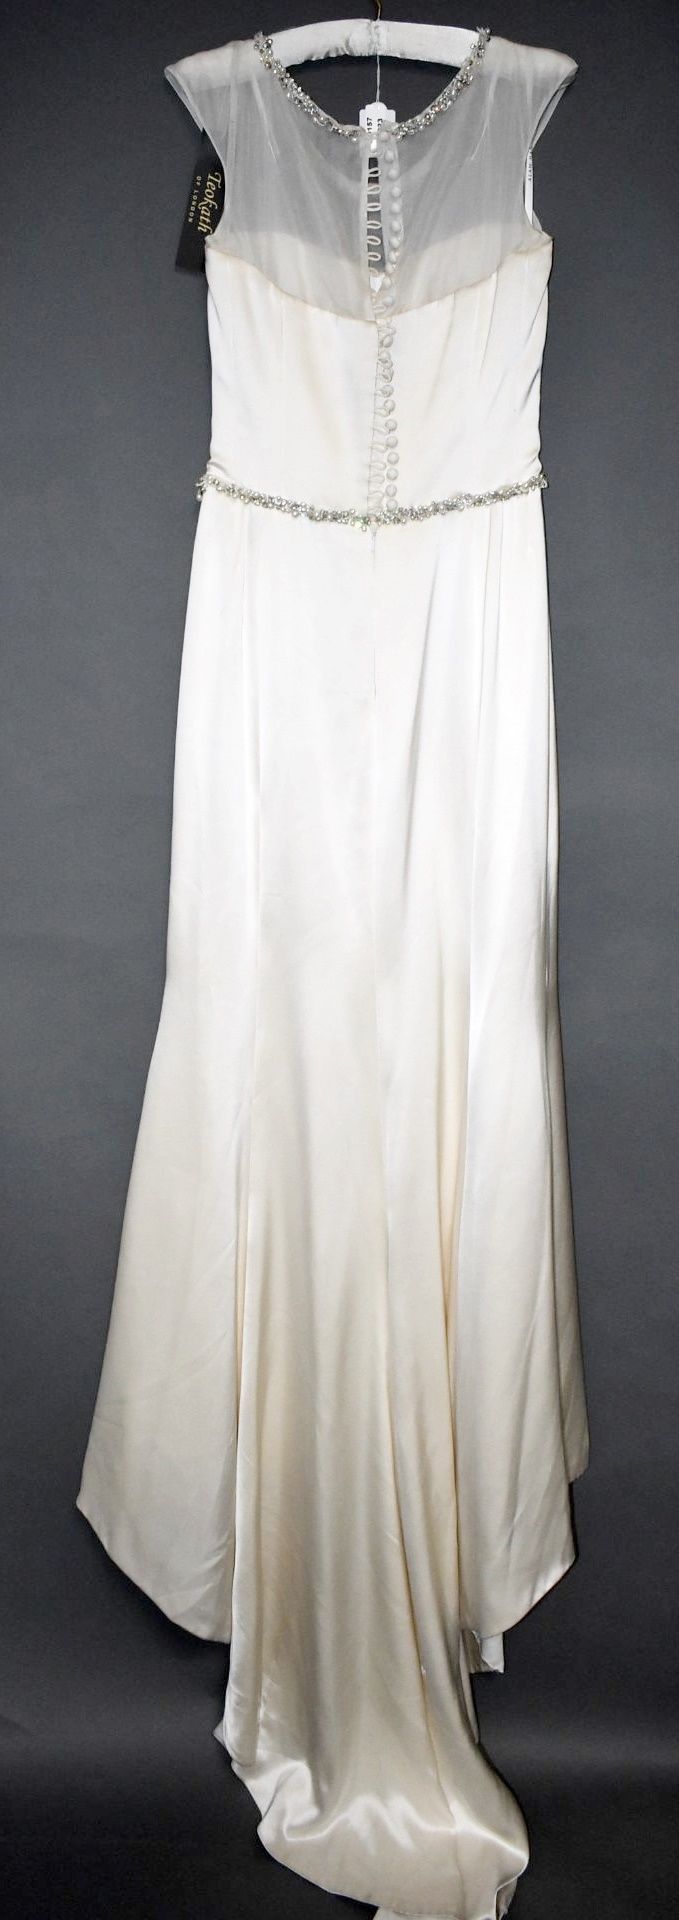 1 x ALAN HANNAH Chiffon And Satin Beaded Designer Wedding Dress Bridal Gown RRP £1,500 UK 12 - Image 2 of 5